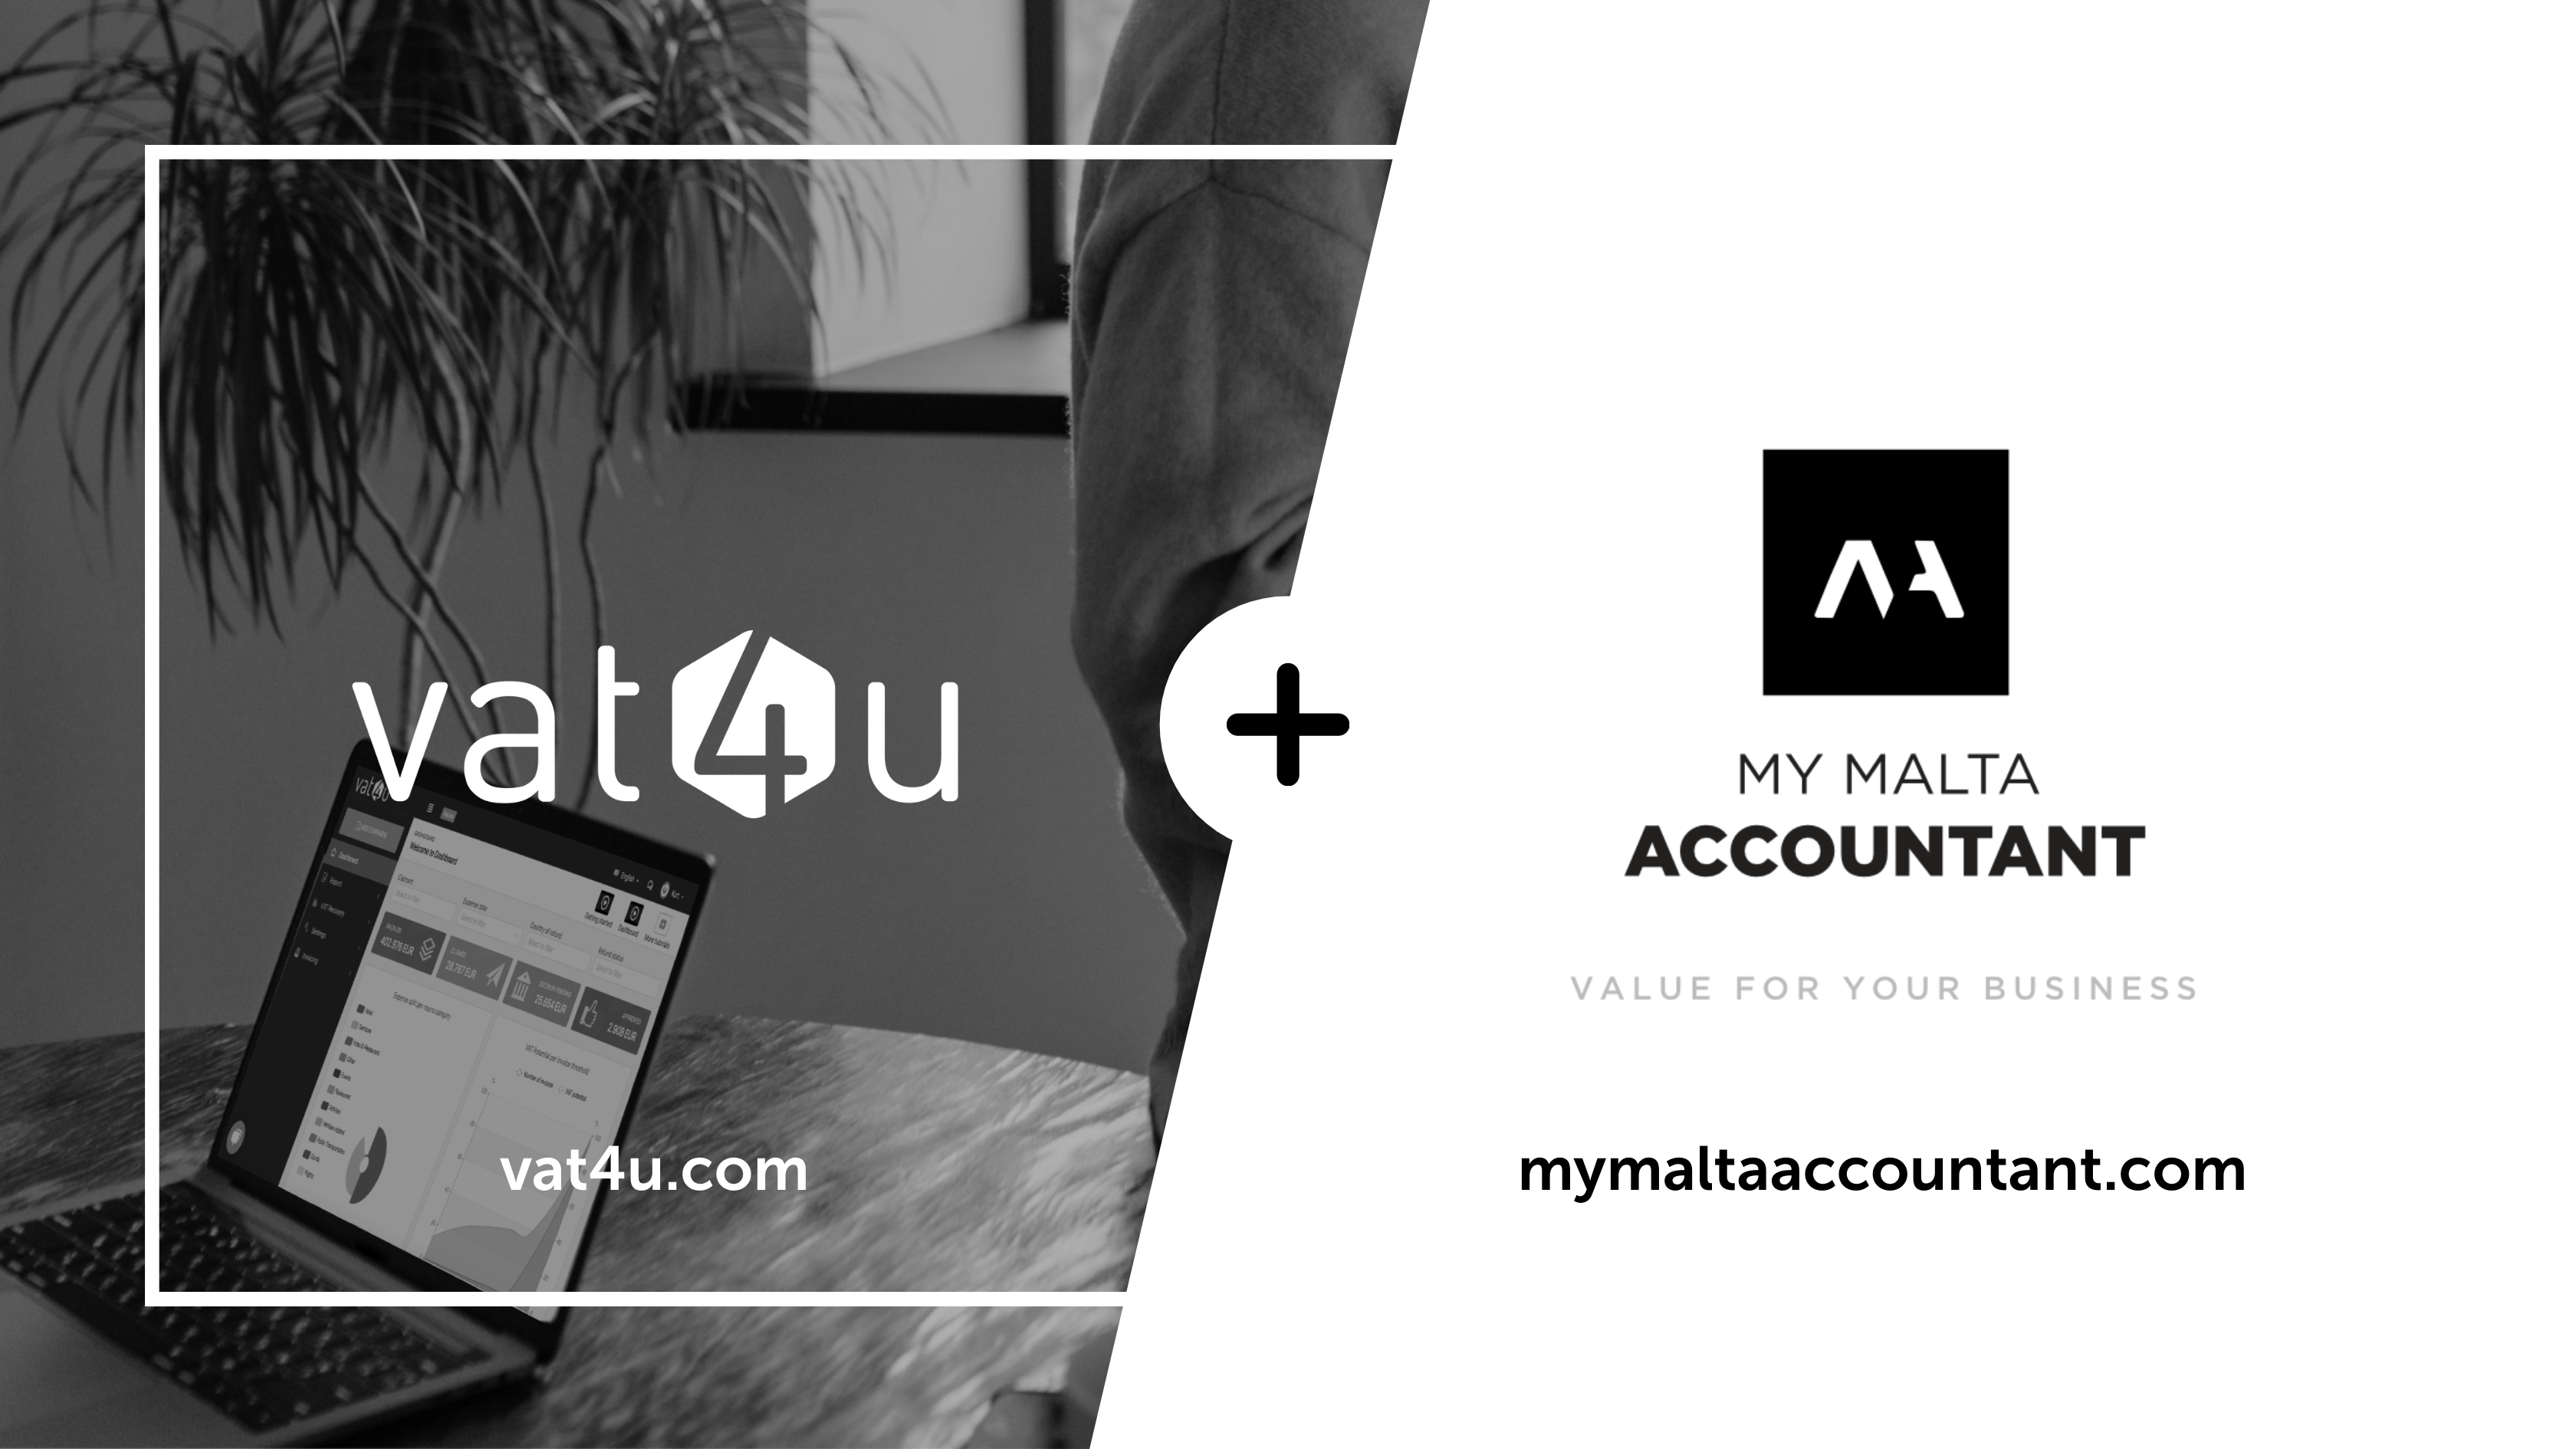 Establishing milestones with My Malta Accountant